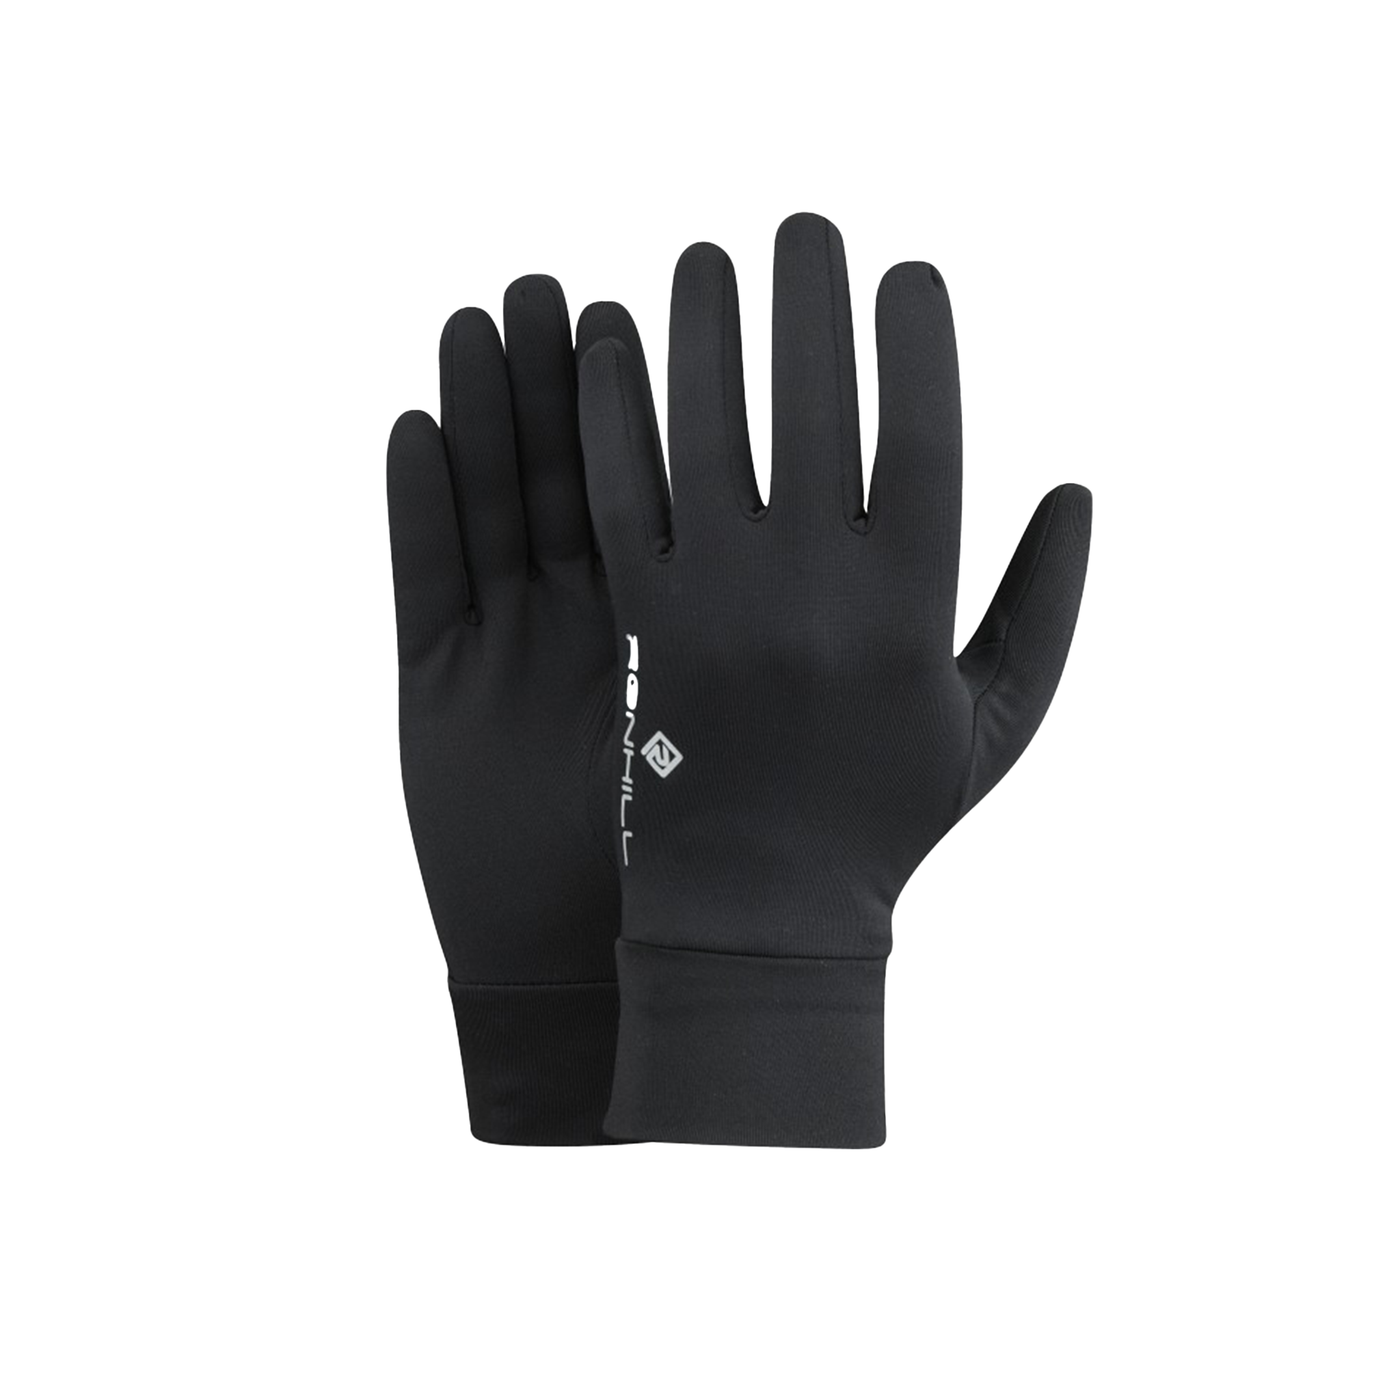 Ronhill Classic Glove - Black